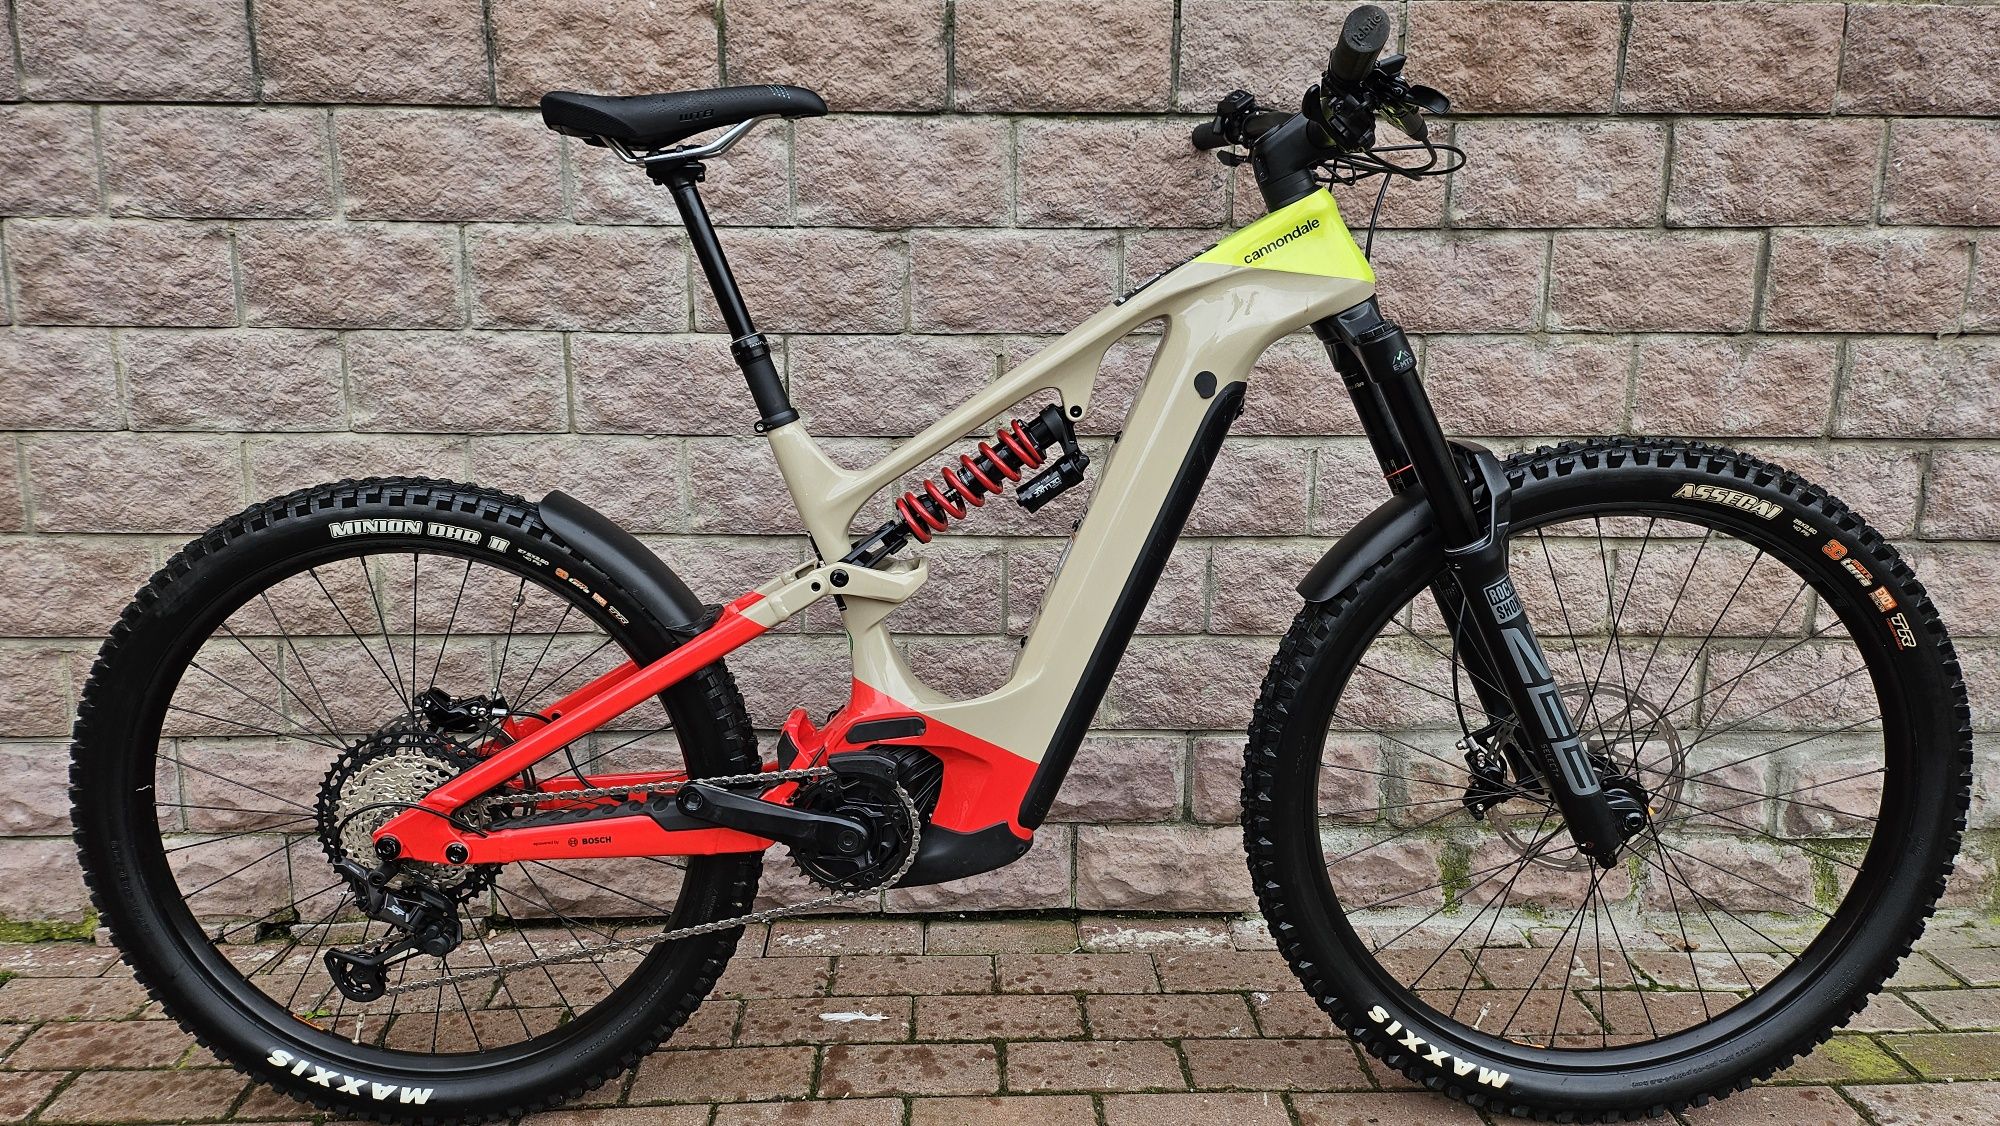 Новый карбоновый электро велосипед електро e bike Conandeil 750 ват